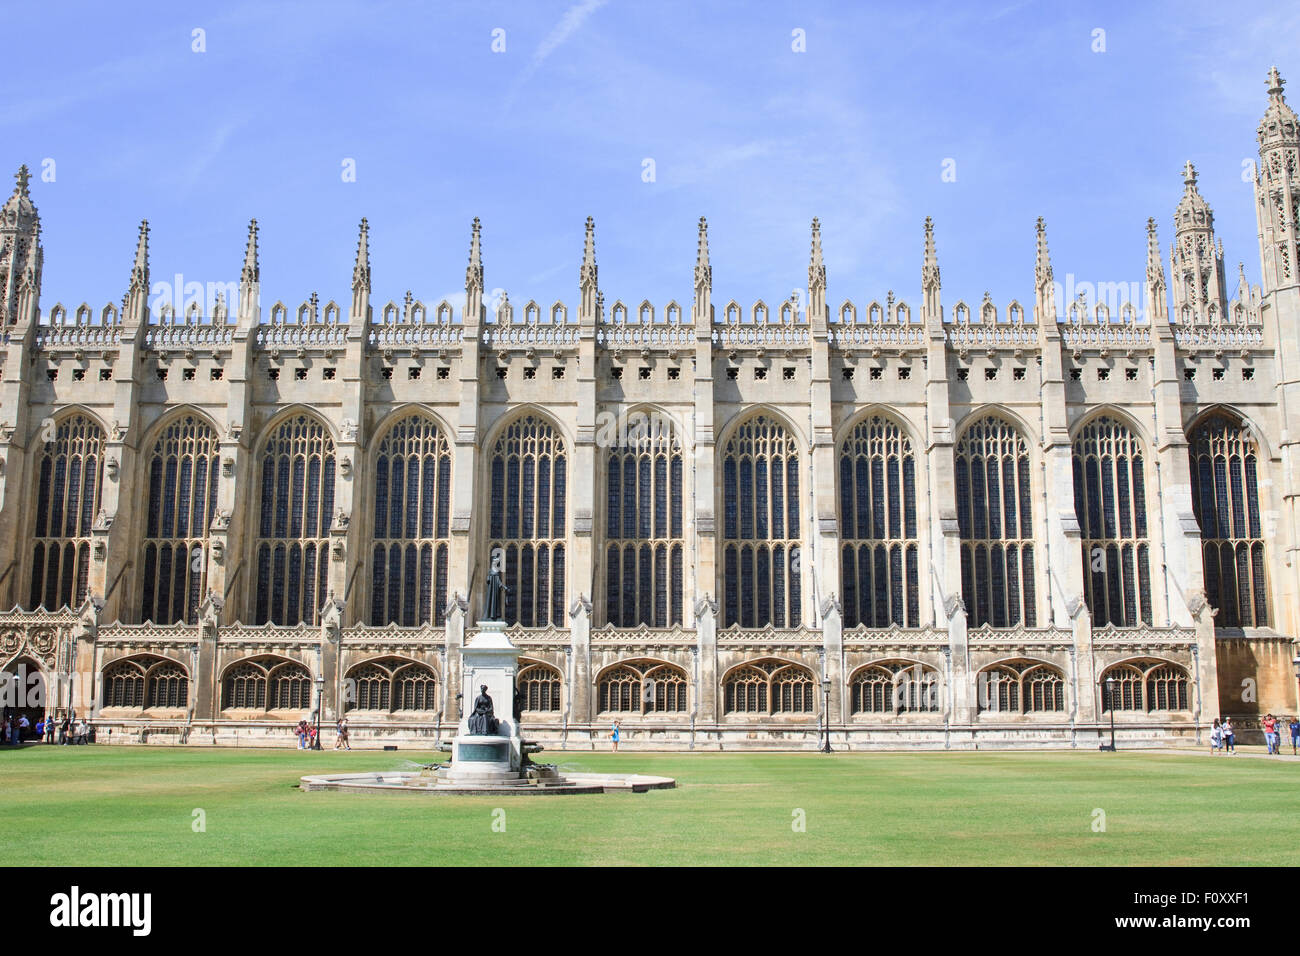 King's College Chapel in Cambridge, England. Stock Photo